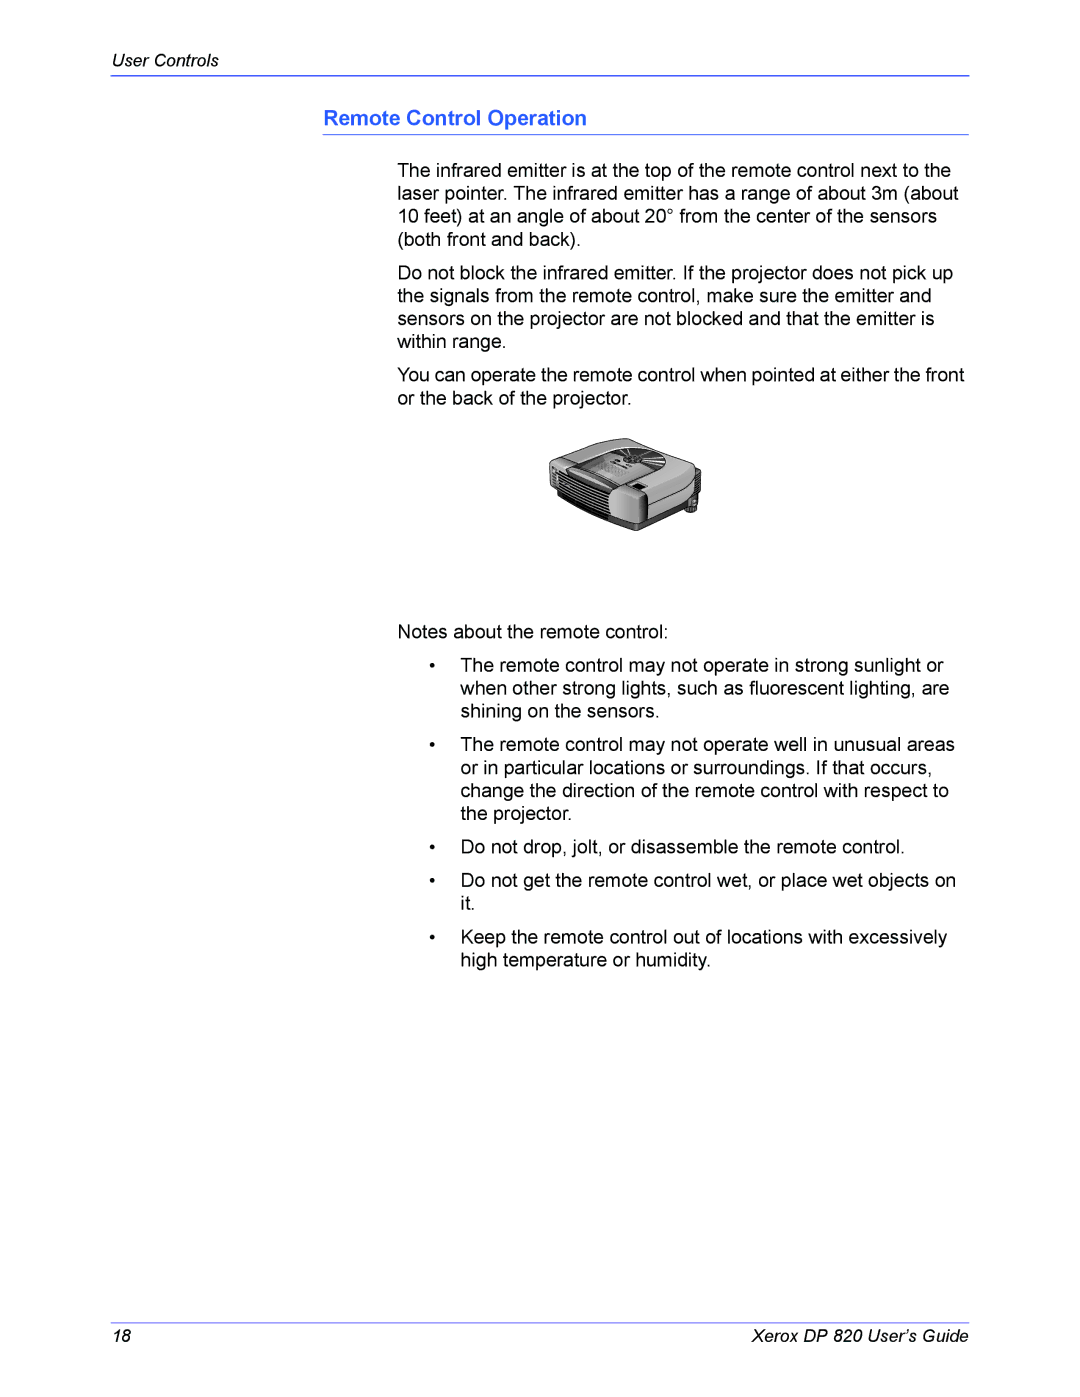 Xerox DP 820 manual Remote Control Operation 